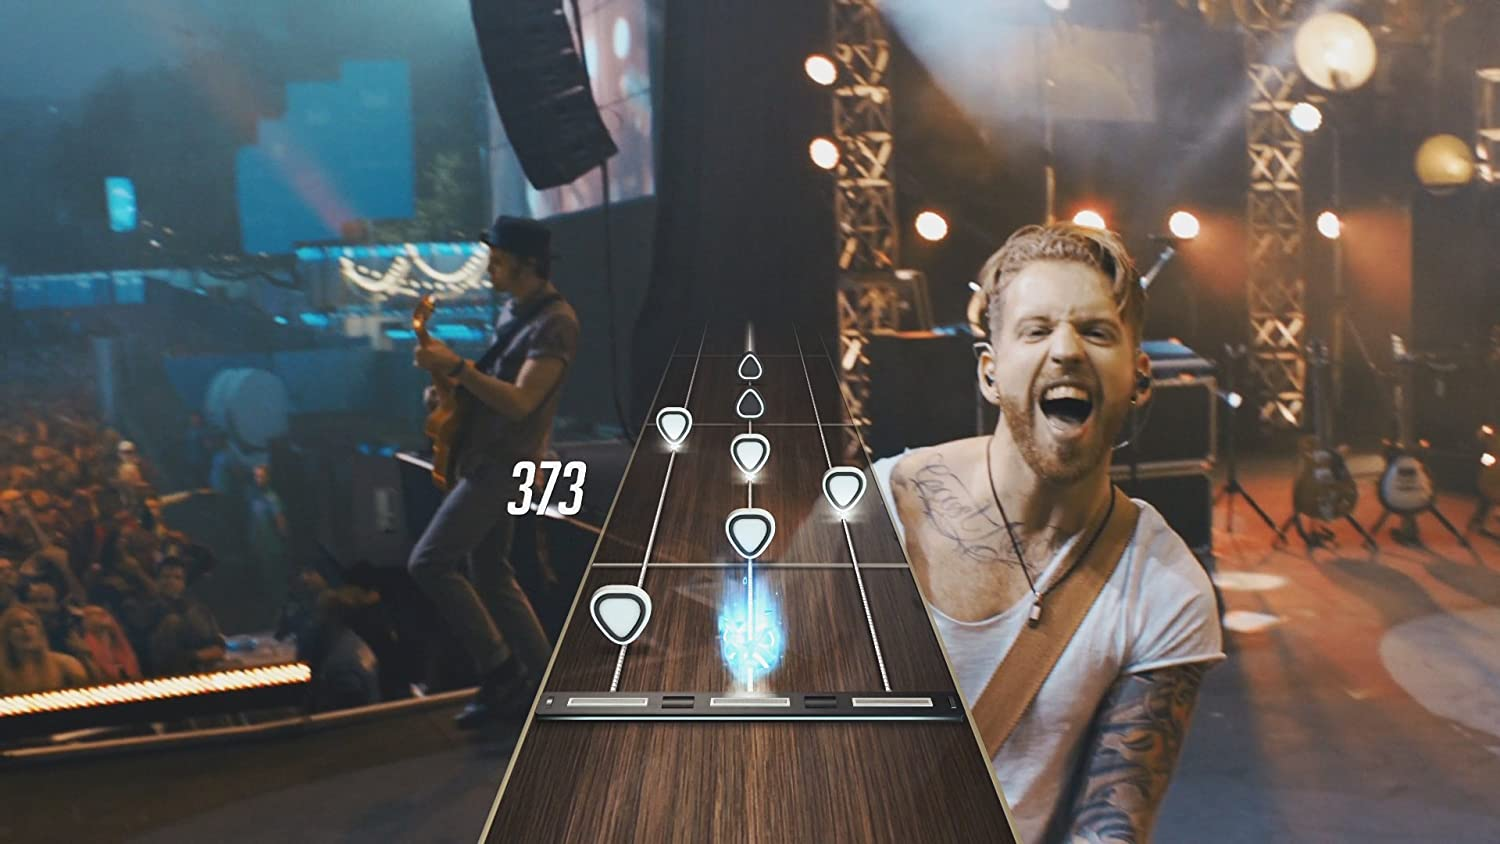 Guitar Hero - Live [PlayStation inkl. 3] Gitarre 